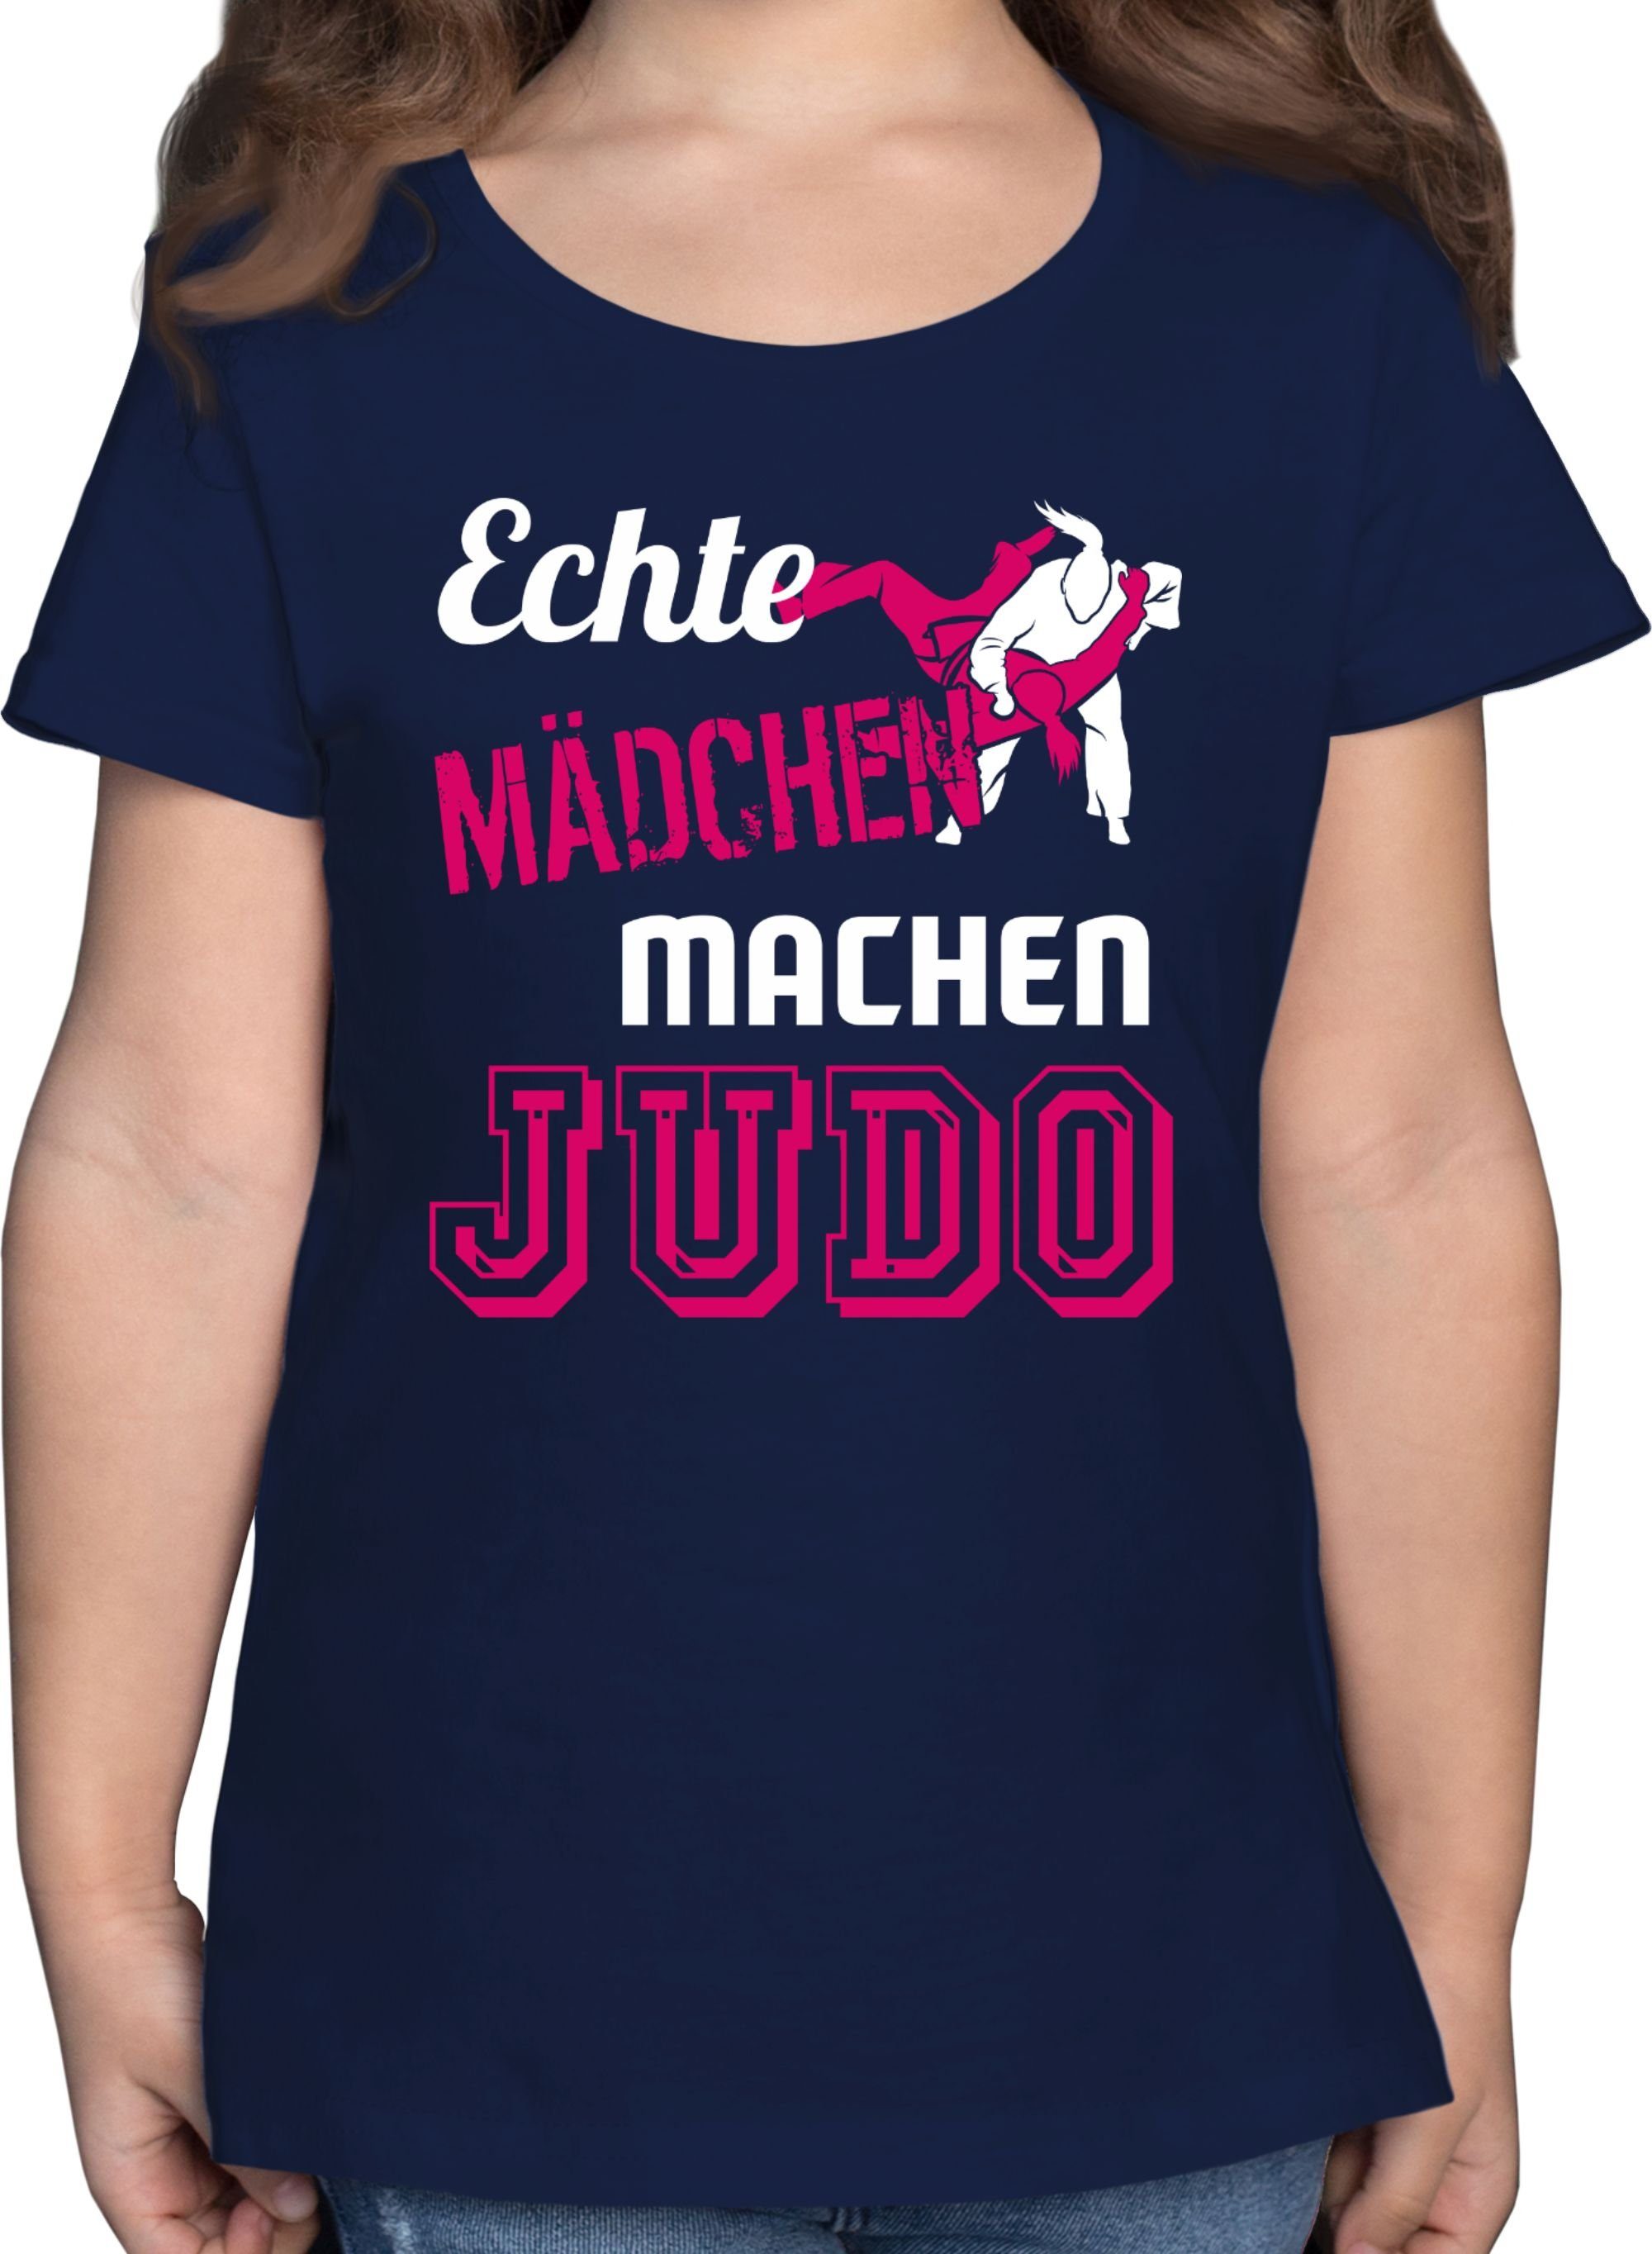 Kleidung 2 machen Mädchen Sport Kinder Dunkelblau Judo T-Shirt Echte Shirtracer